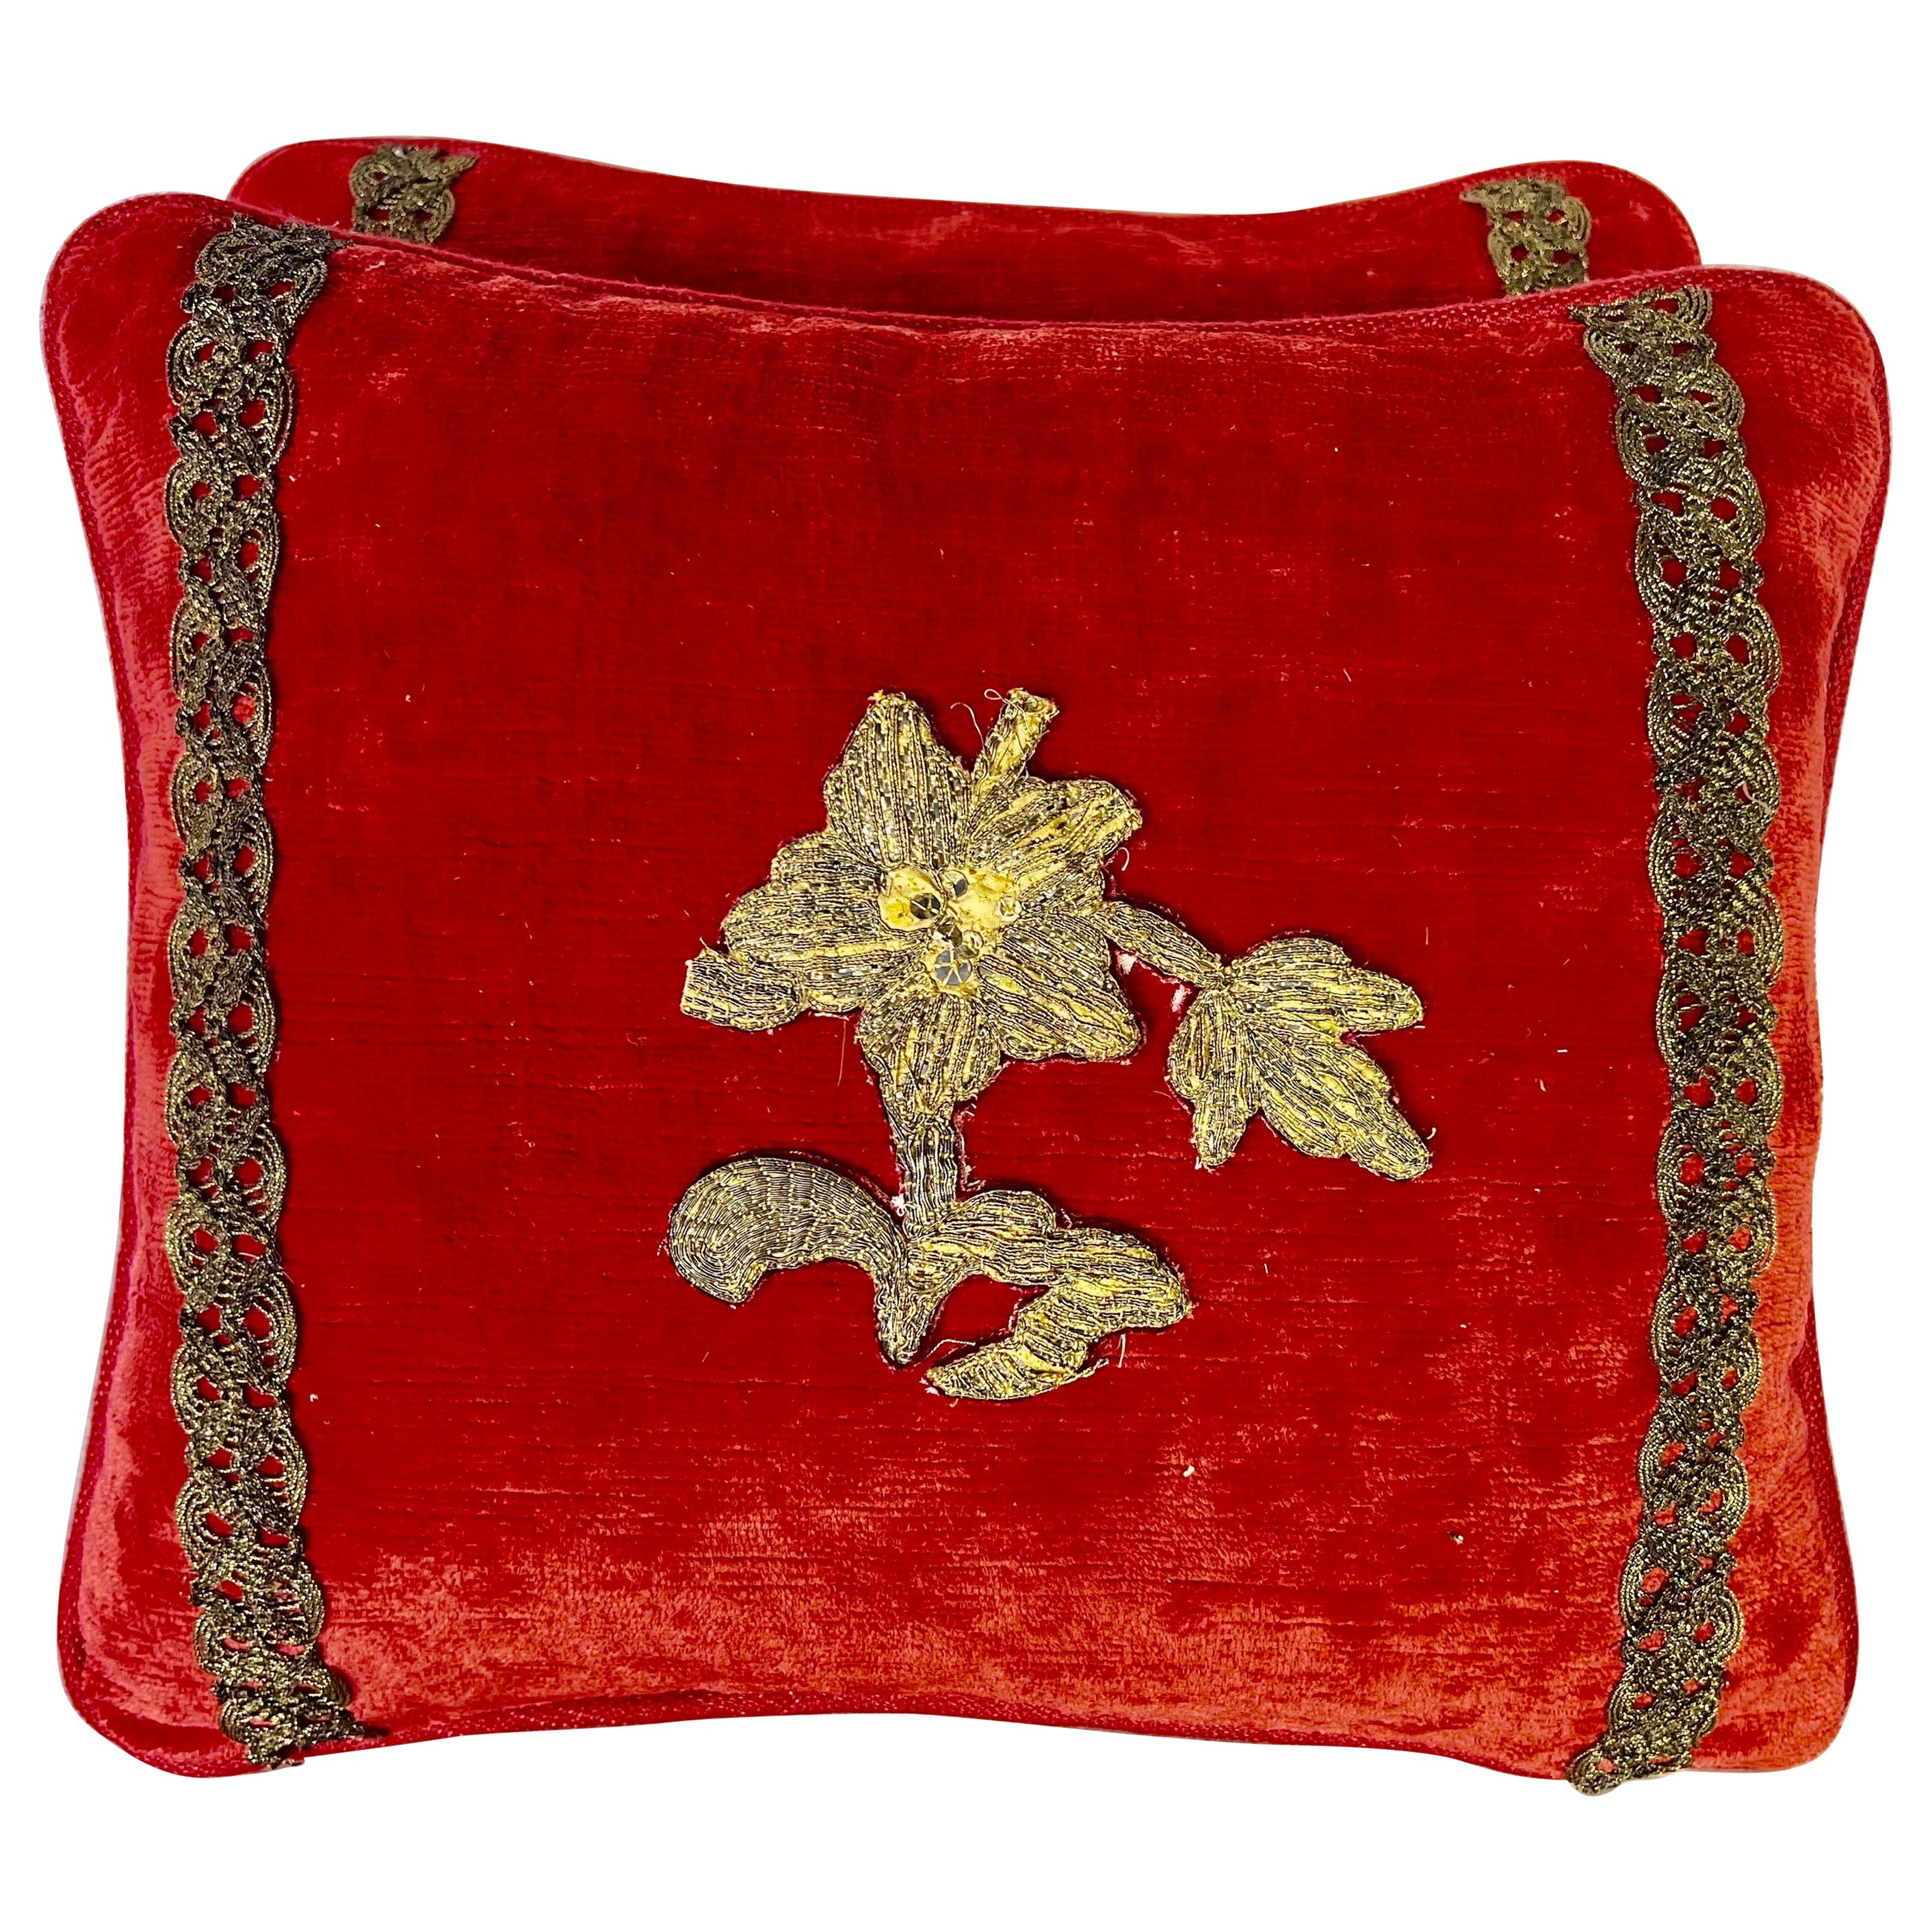 Pair of Appliquéd Red Velvet Pillows by MLA For Sale